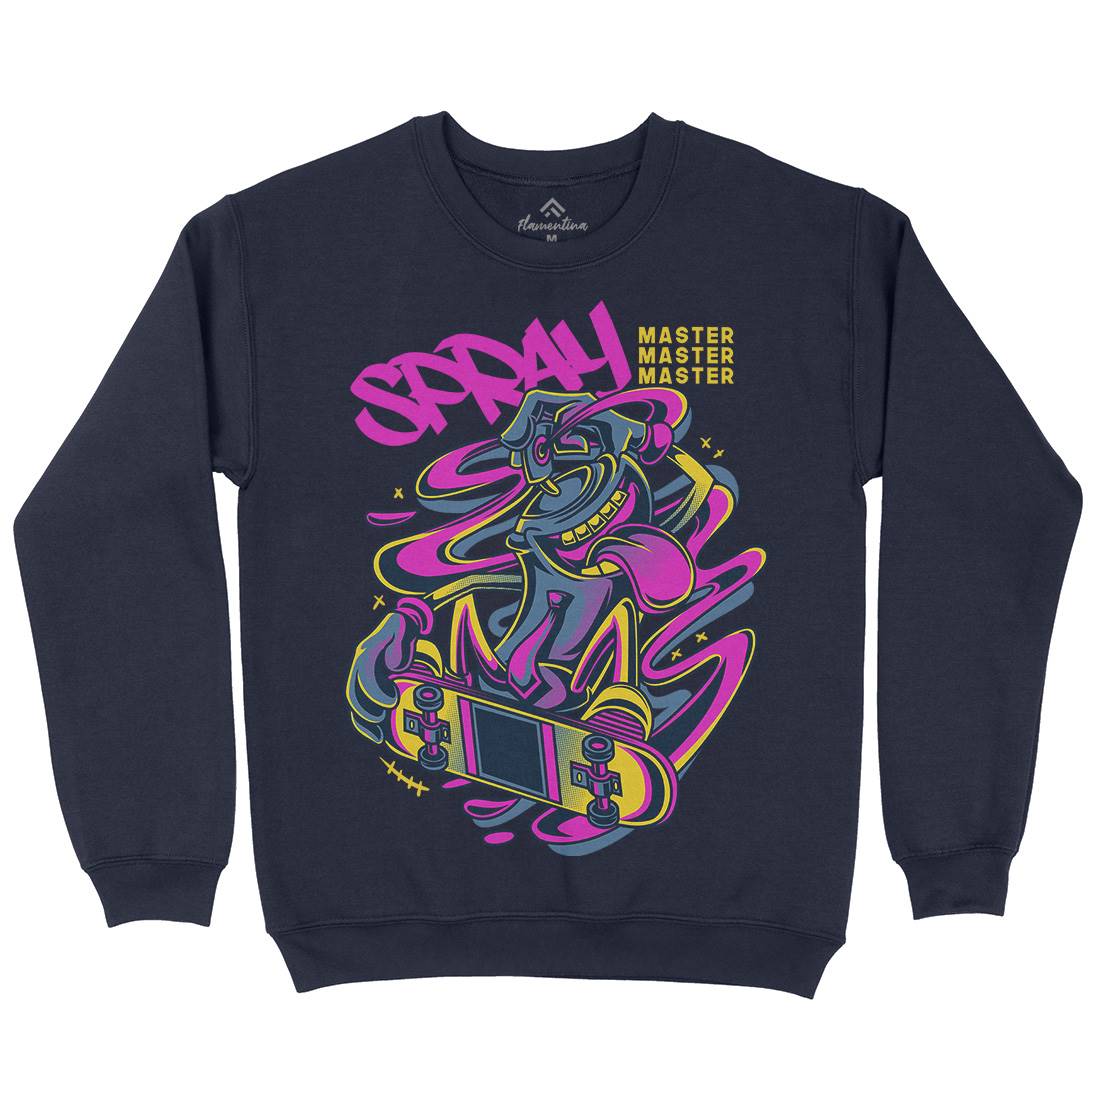 Spray Master Mens Crew Neck Sweatshirt Skate D832